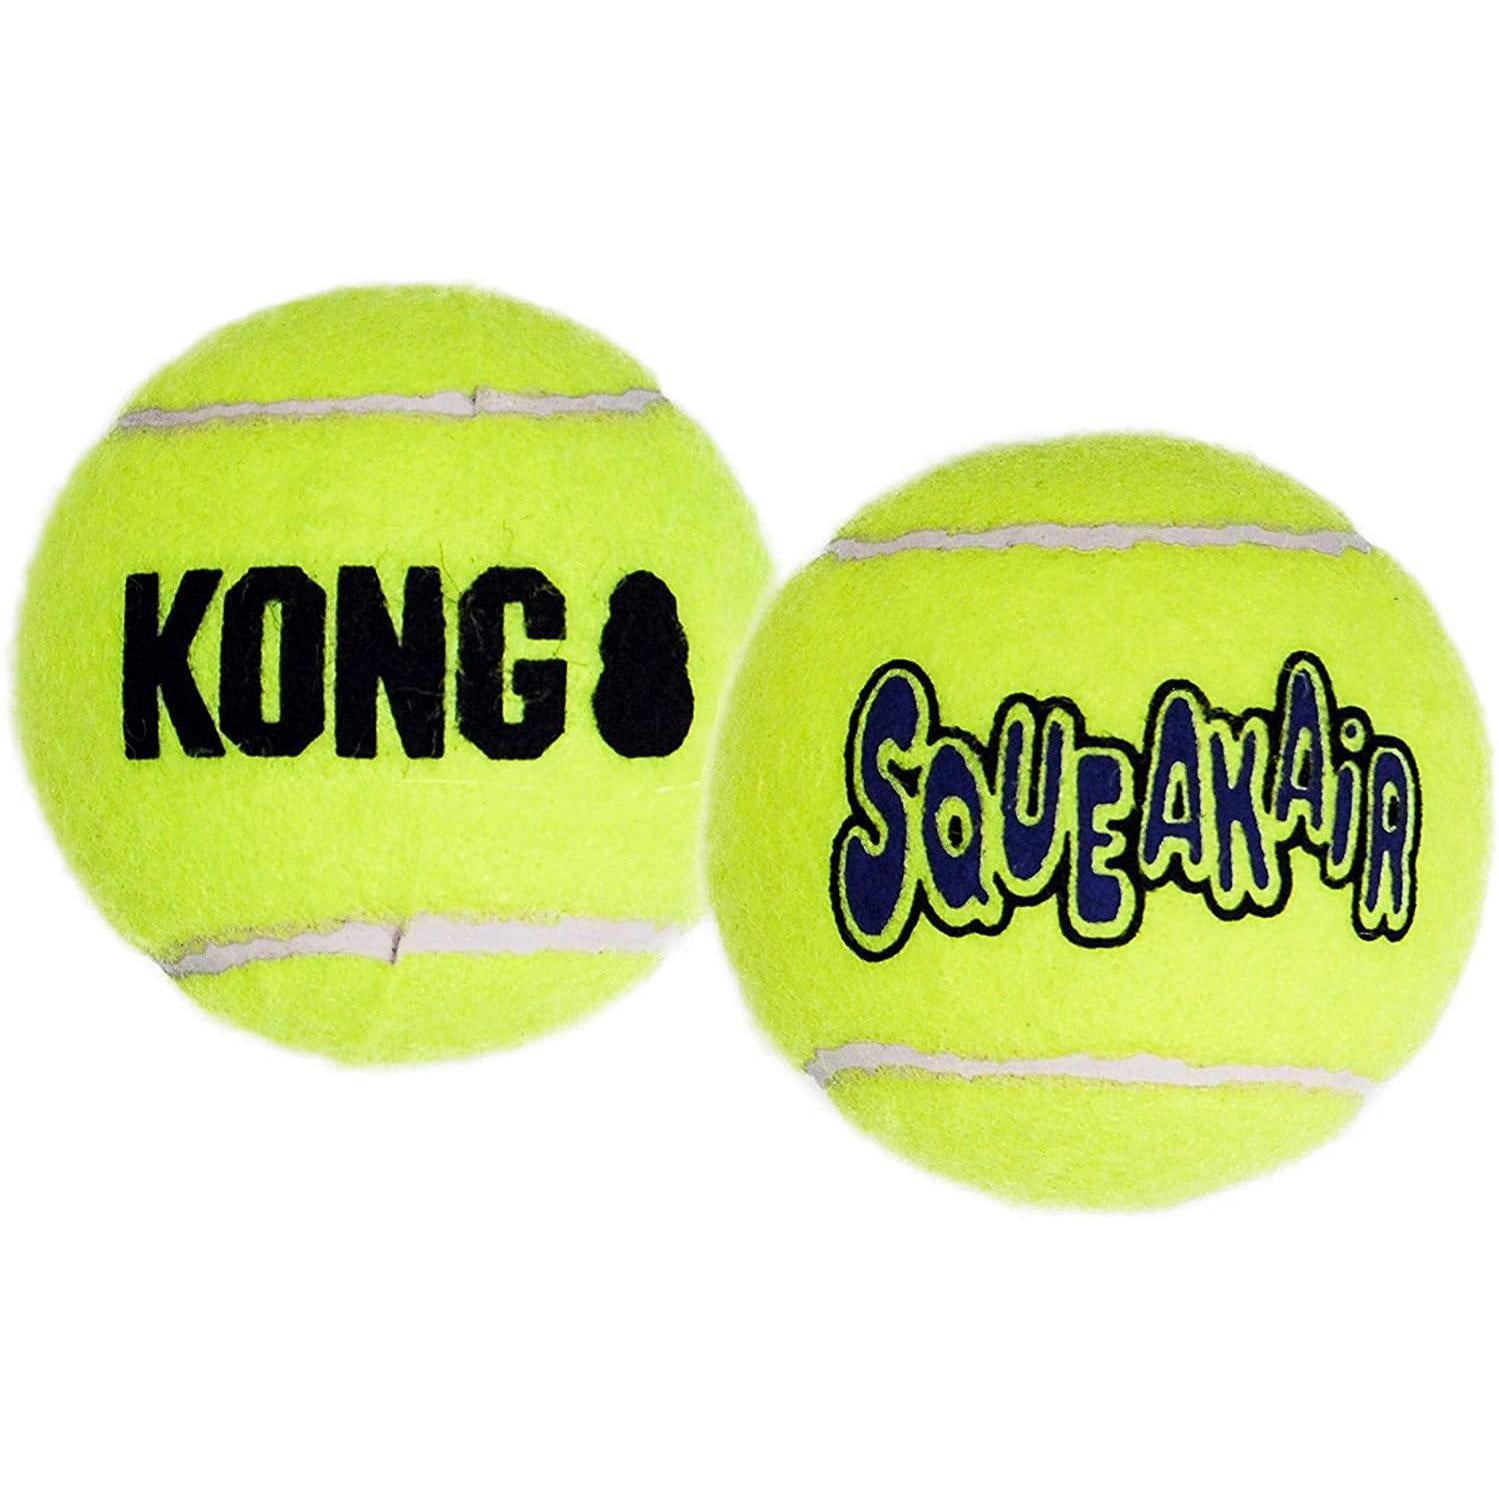 KONG SqueakAir Balls - Pallina Misura M